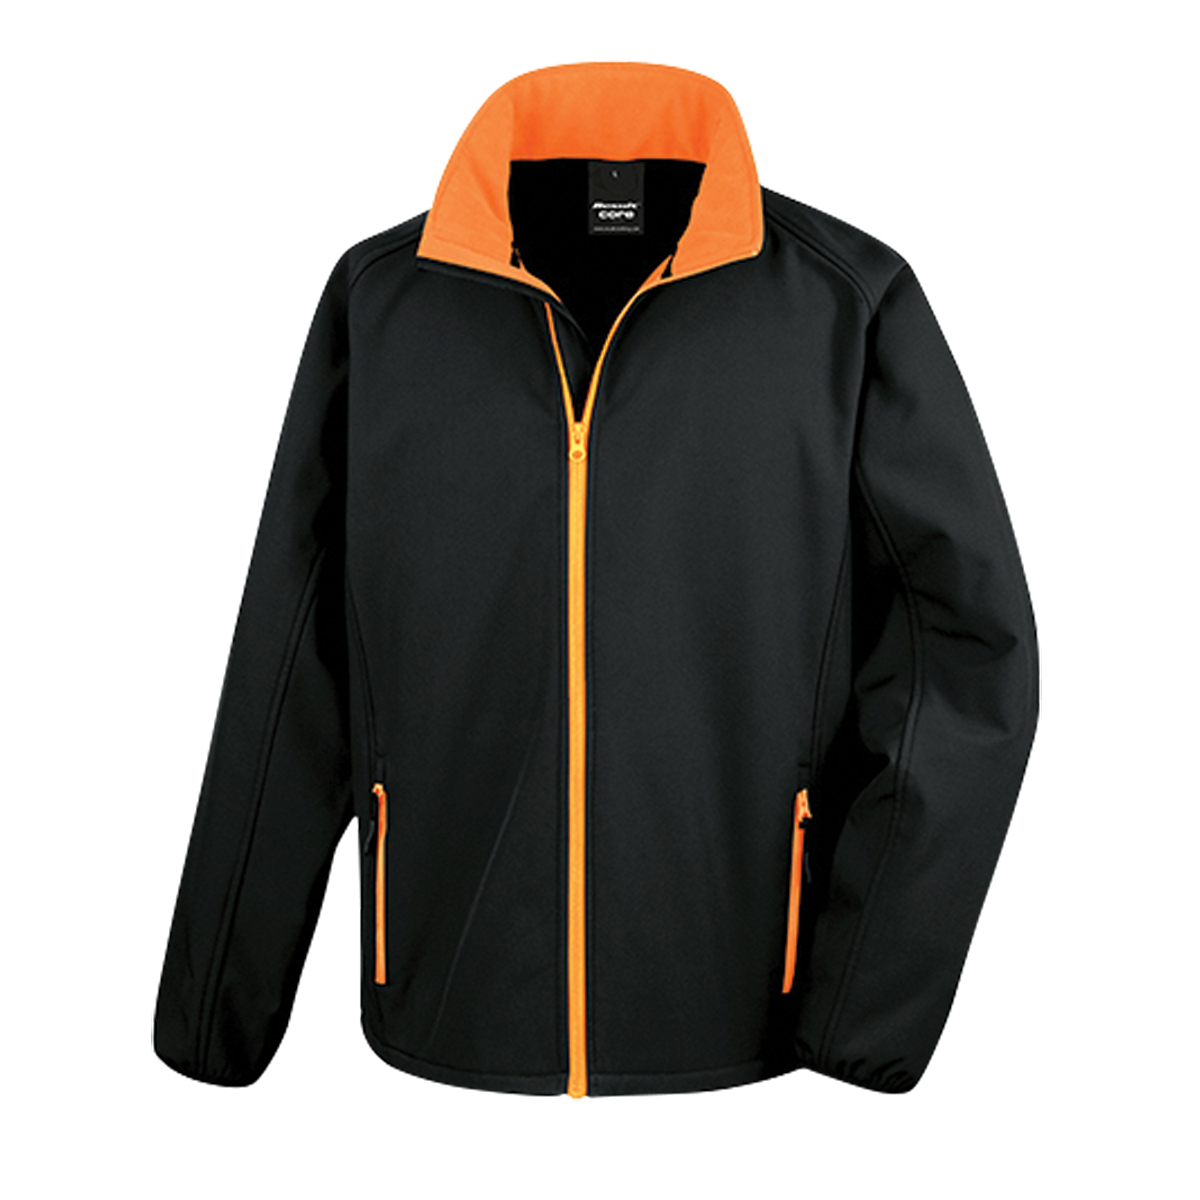 Softshellová pánská bunda Alex Fox Nebraska - černá-oranžová, L